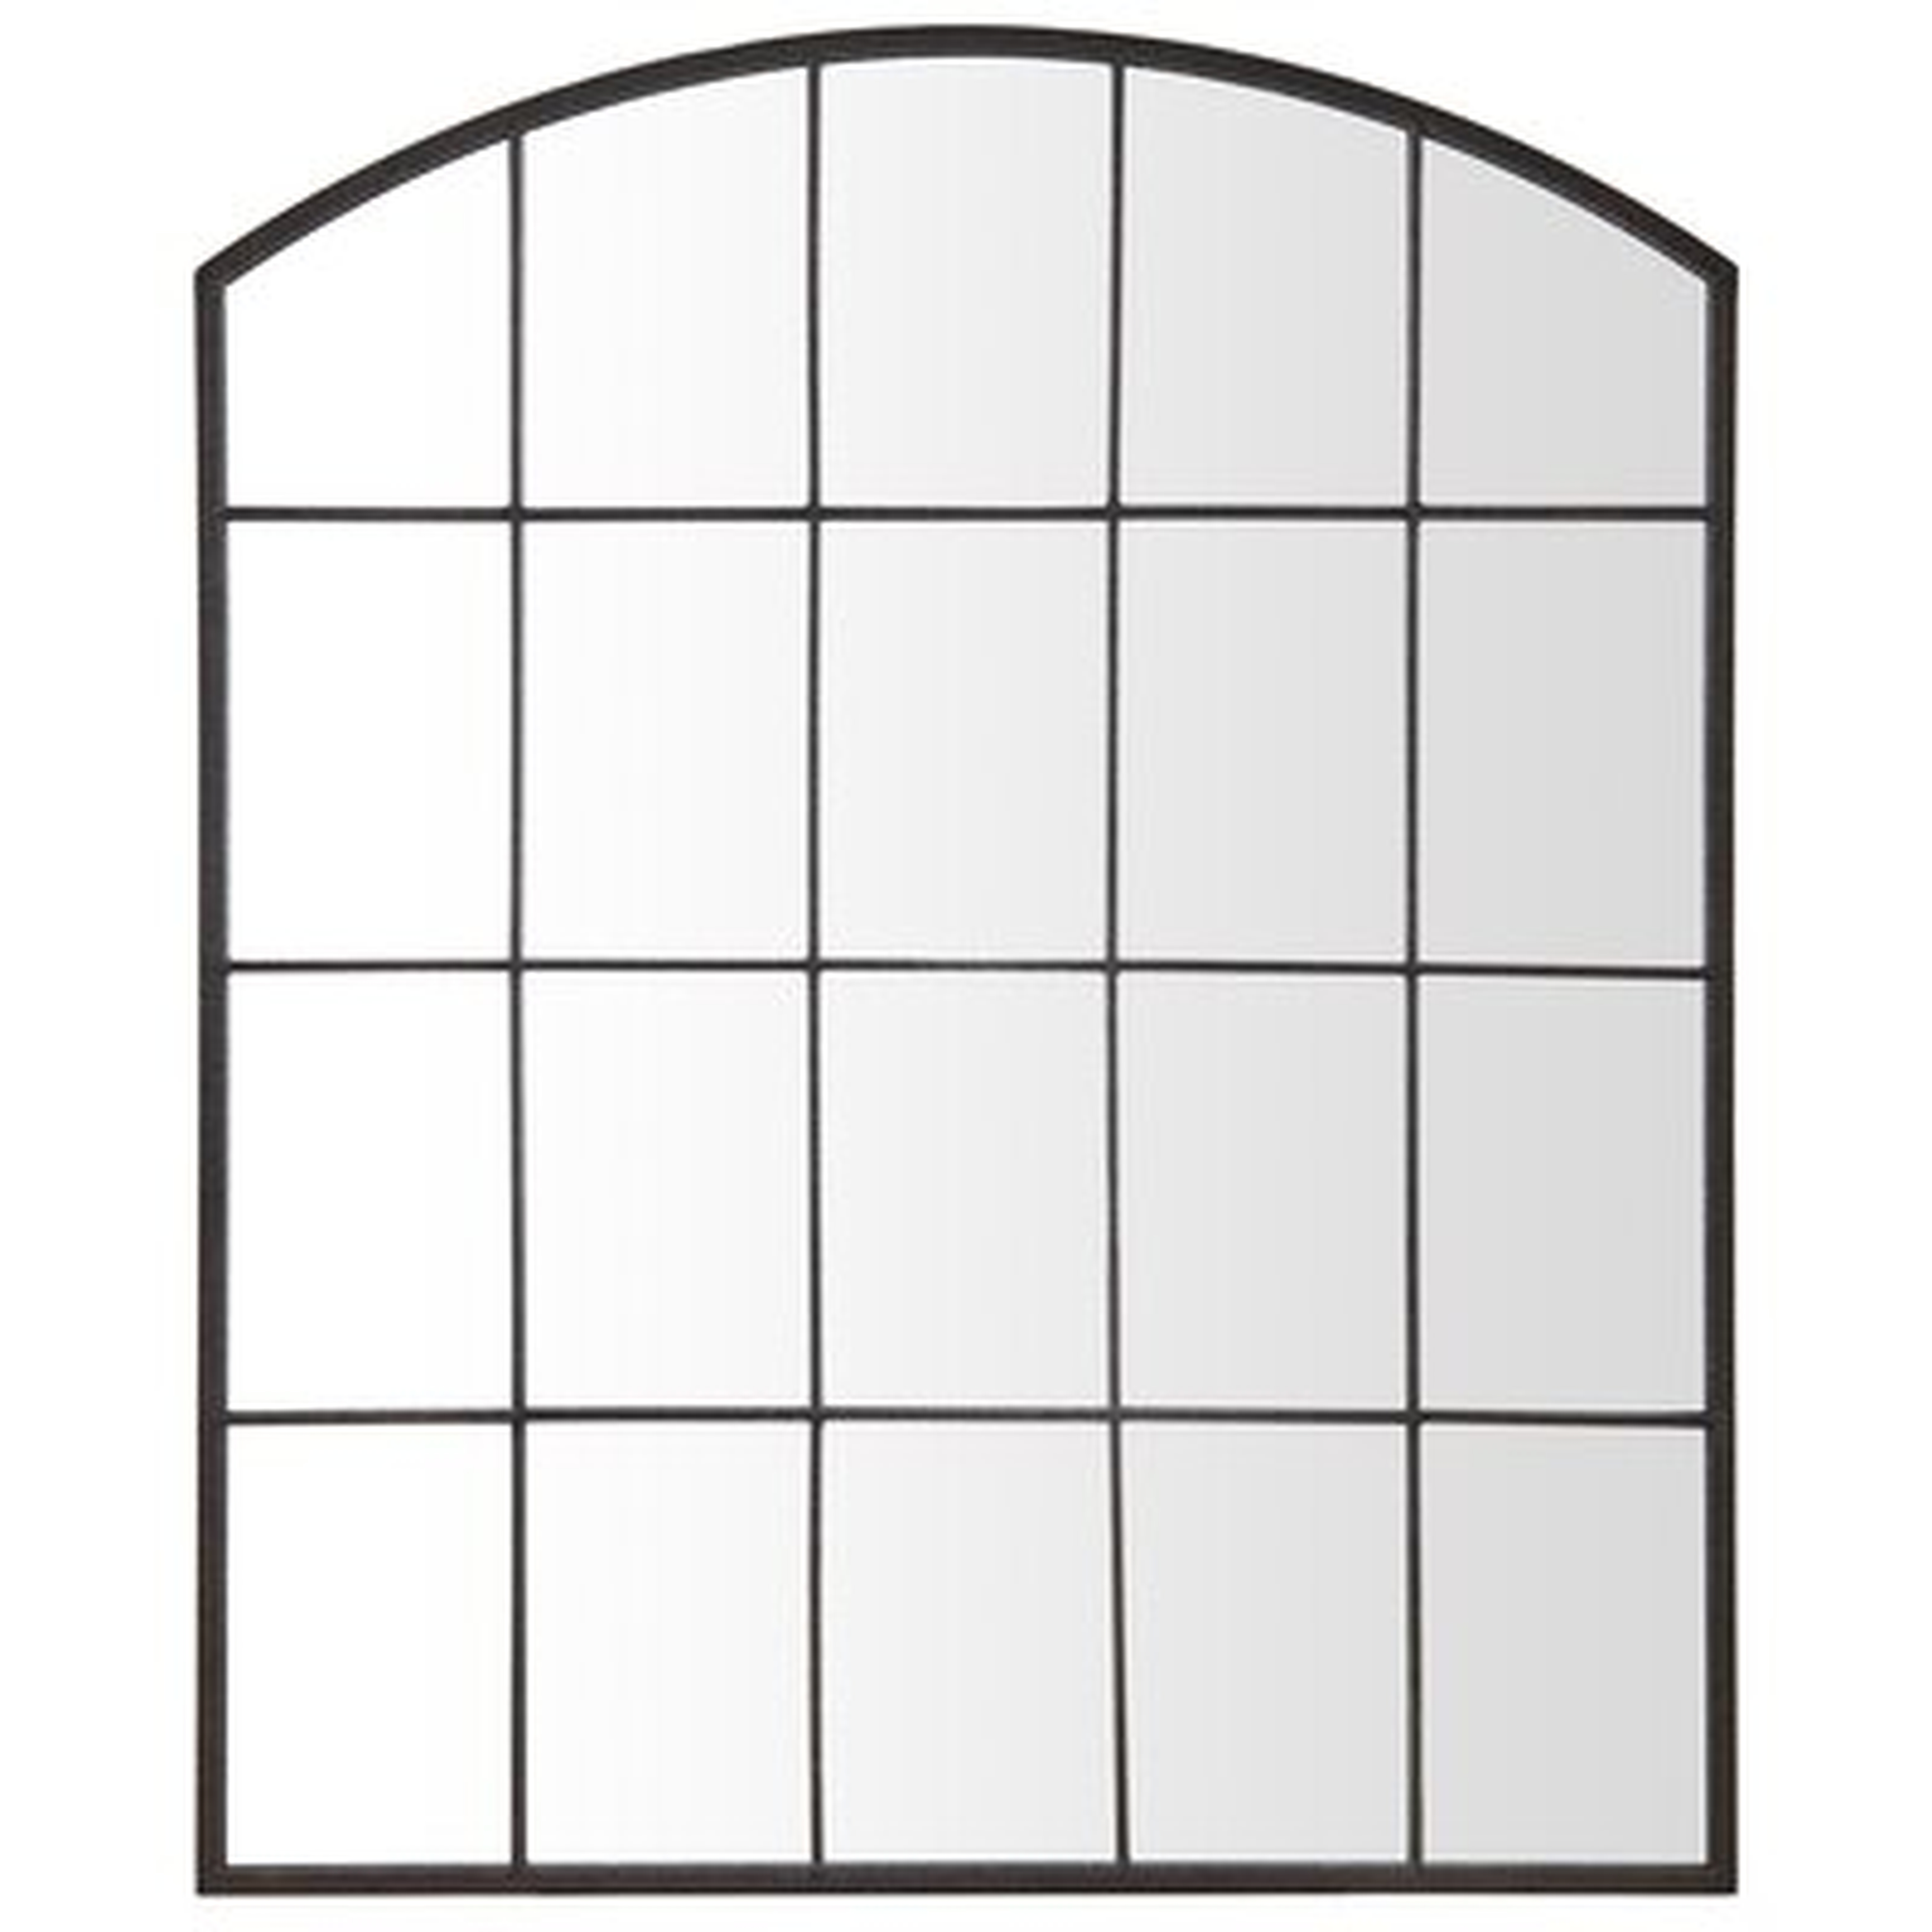 Firstime & Co. Dempsey Arch Windowpane Mirror, Black - Wayfair